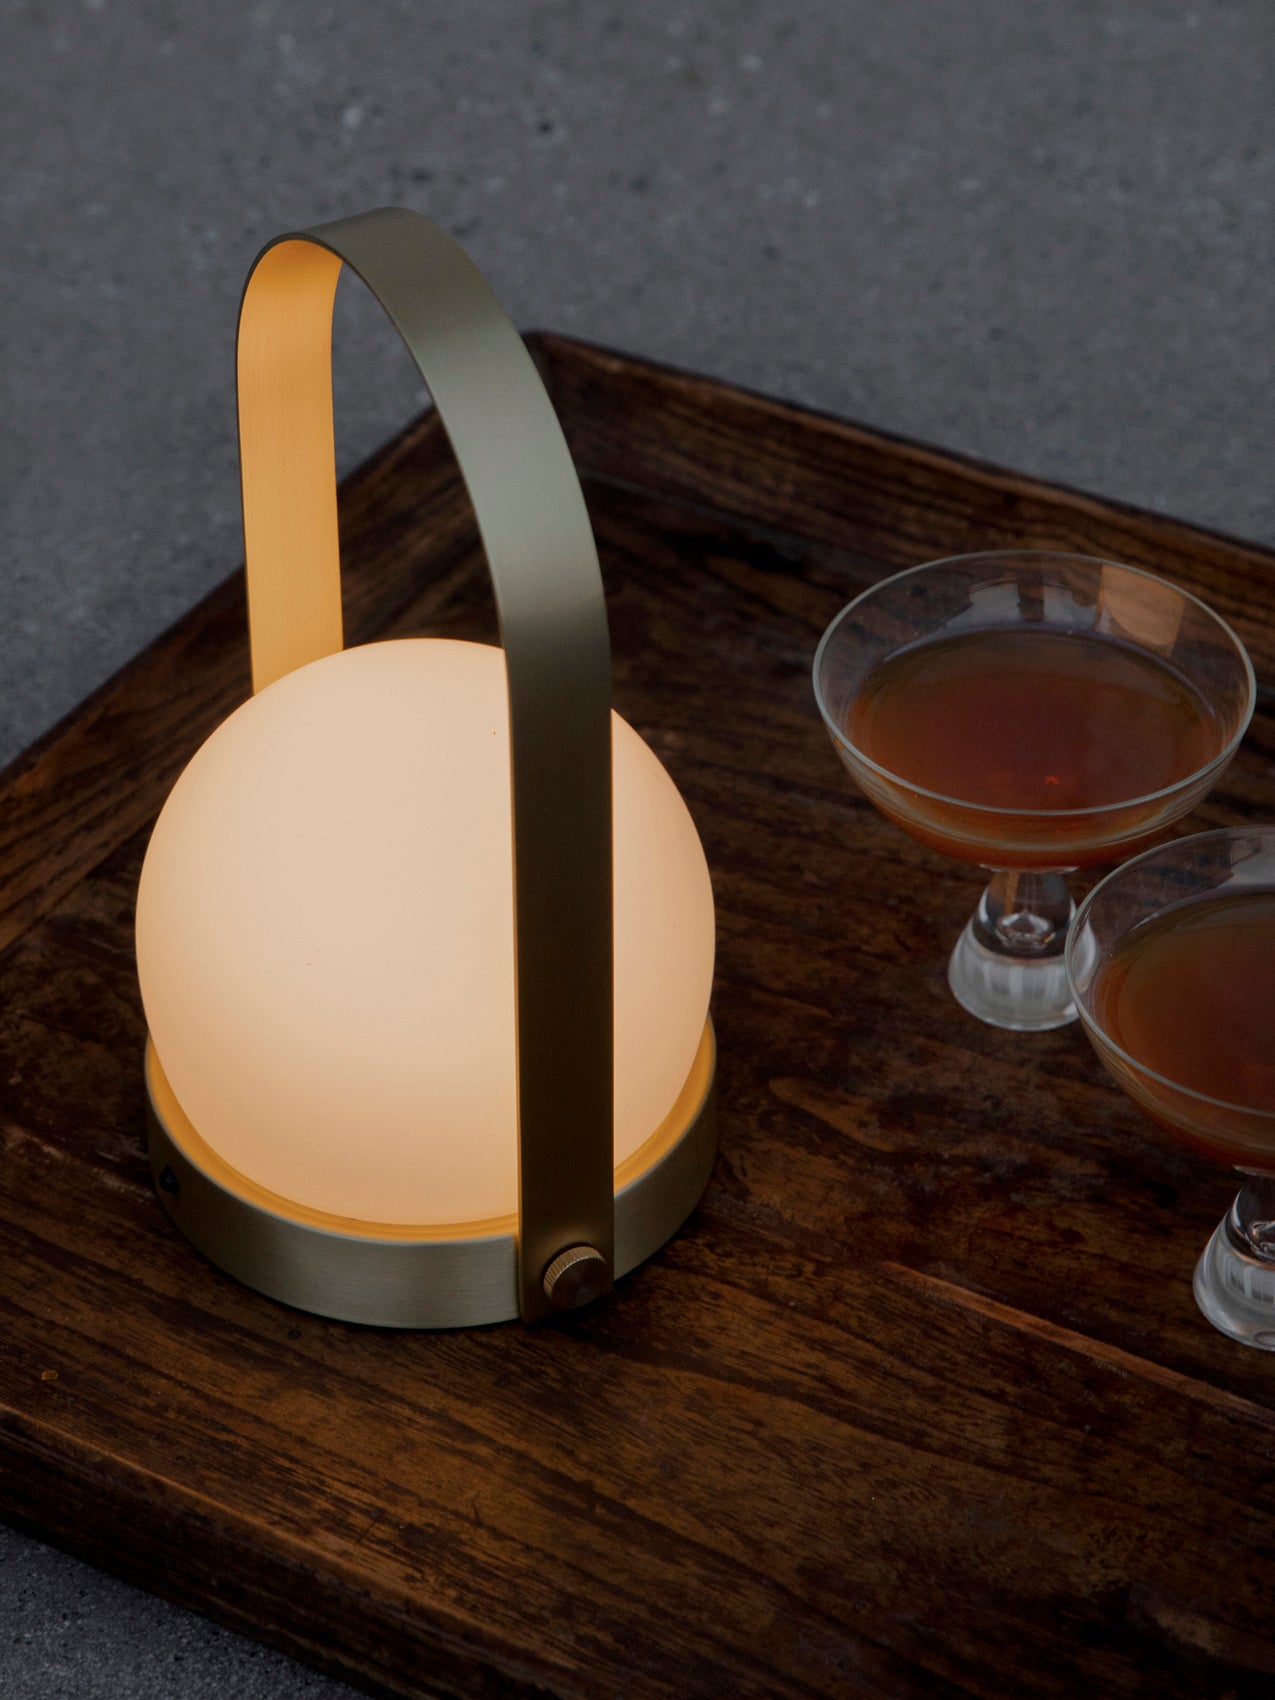 Carrie Portable LED Lamp-Portable Lamp-Norm Architects-menu-minimalist-modern-danish-design-home-decor